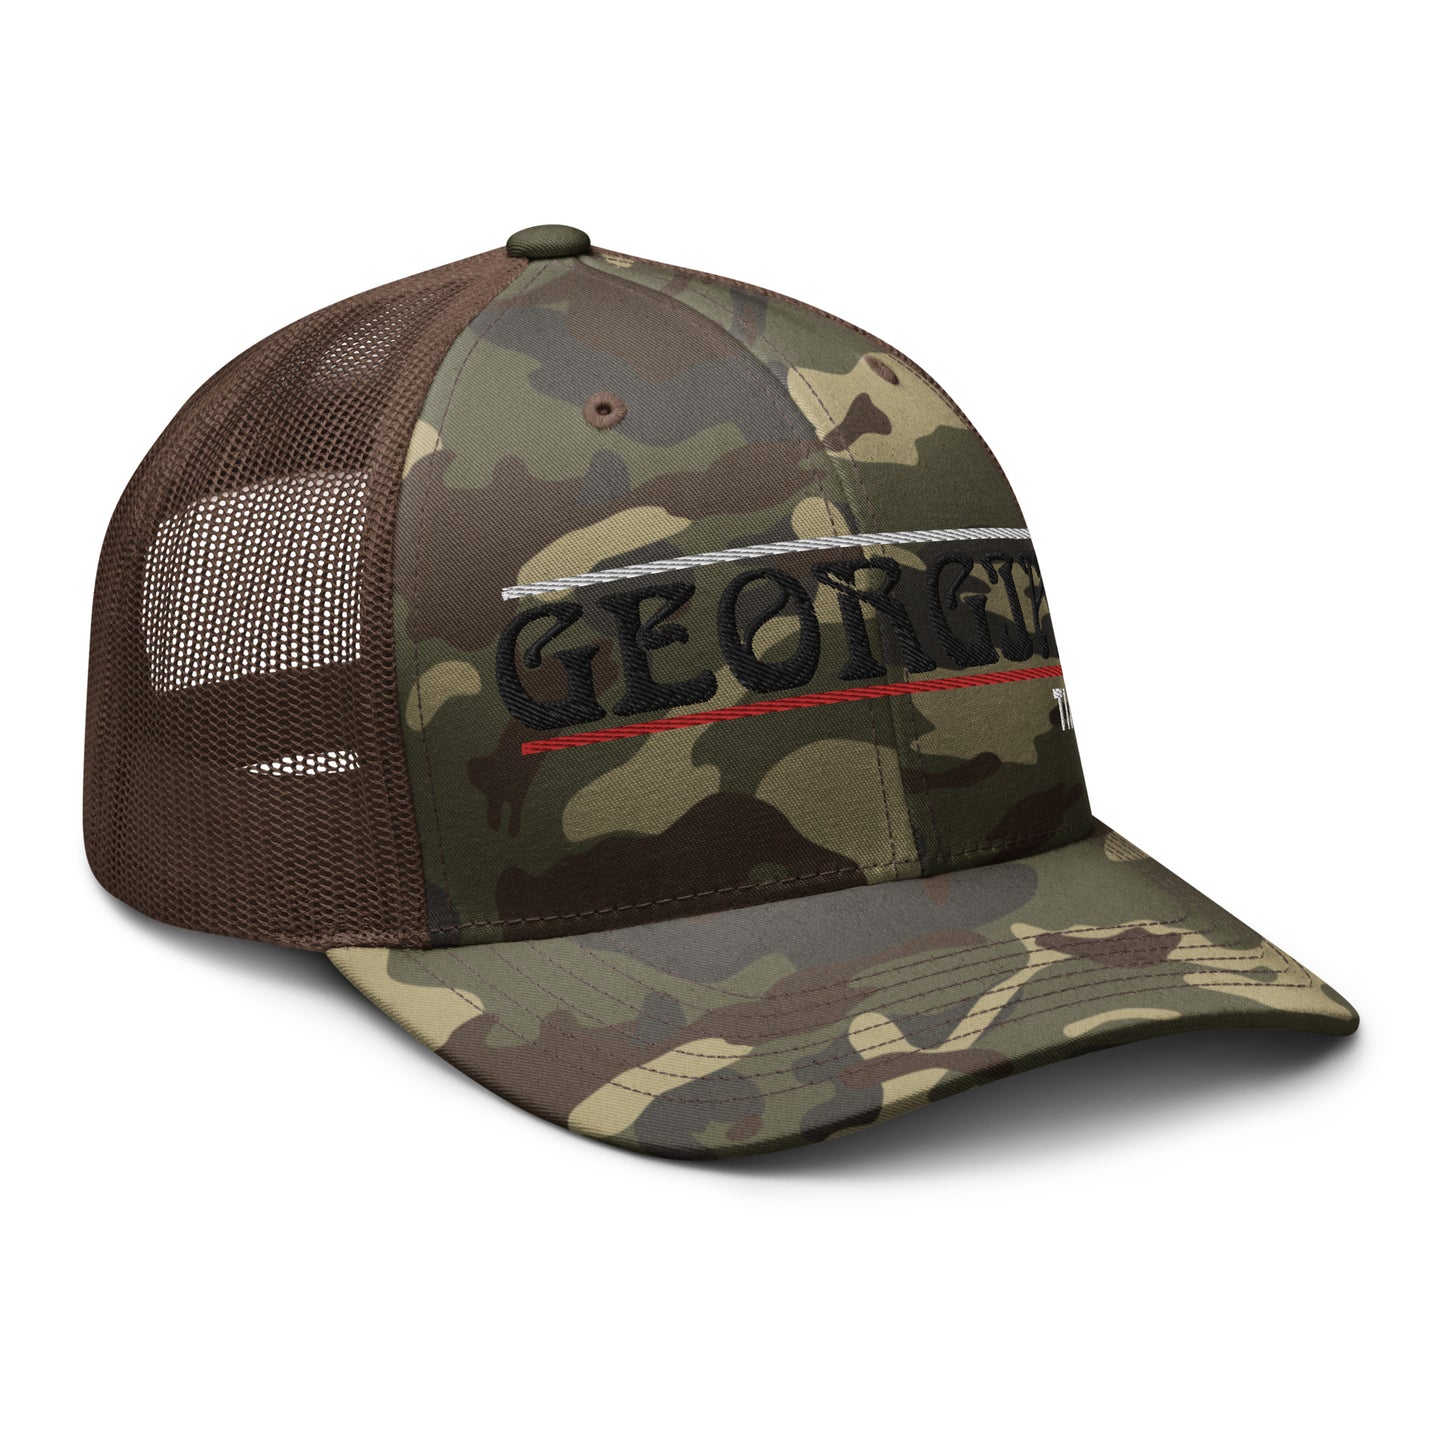 GEORGIA Camouflage trucker hat